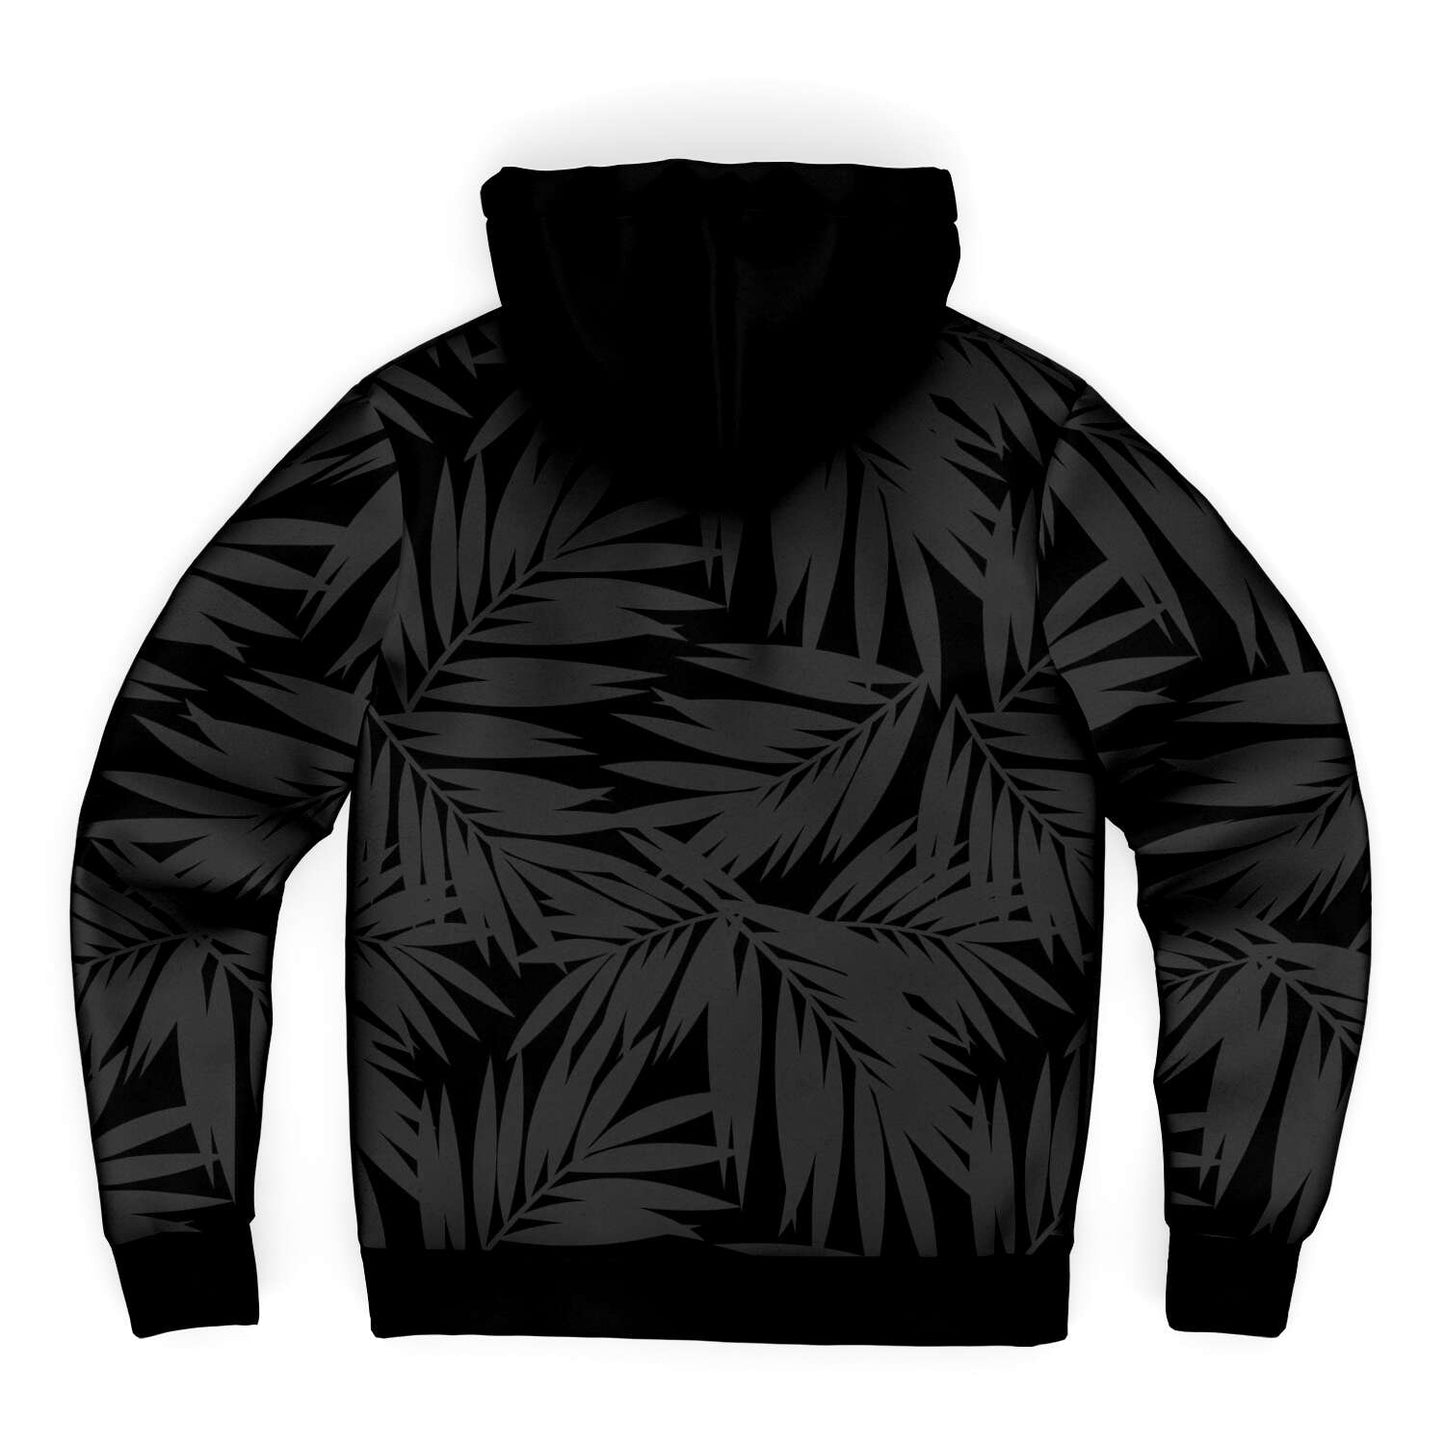 Hafa Adai Coconut Leaves Guam CNMI Black Microfleece Hoodie Jacket